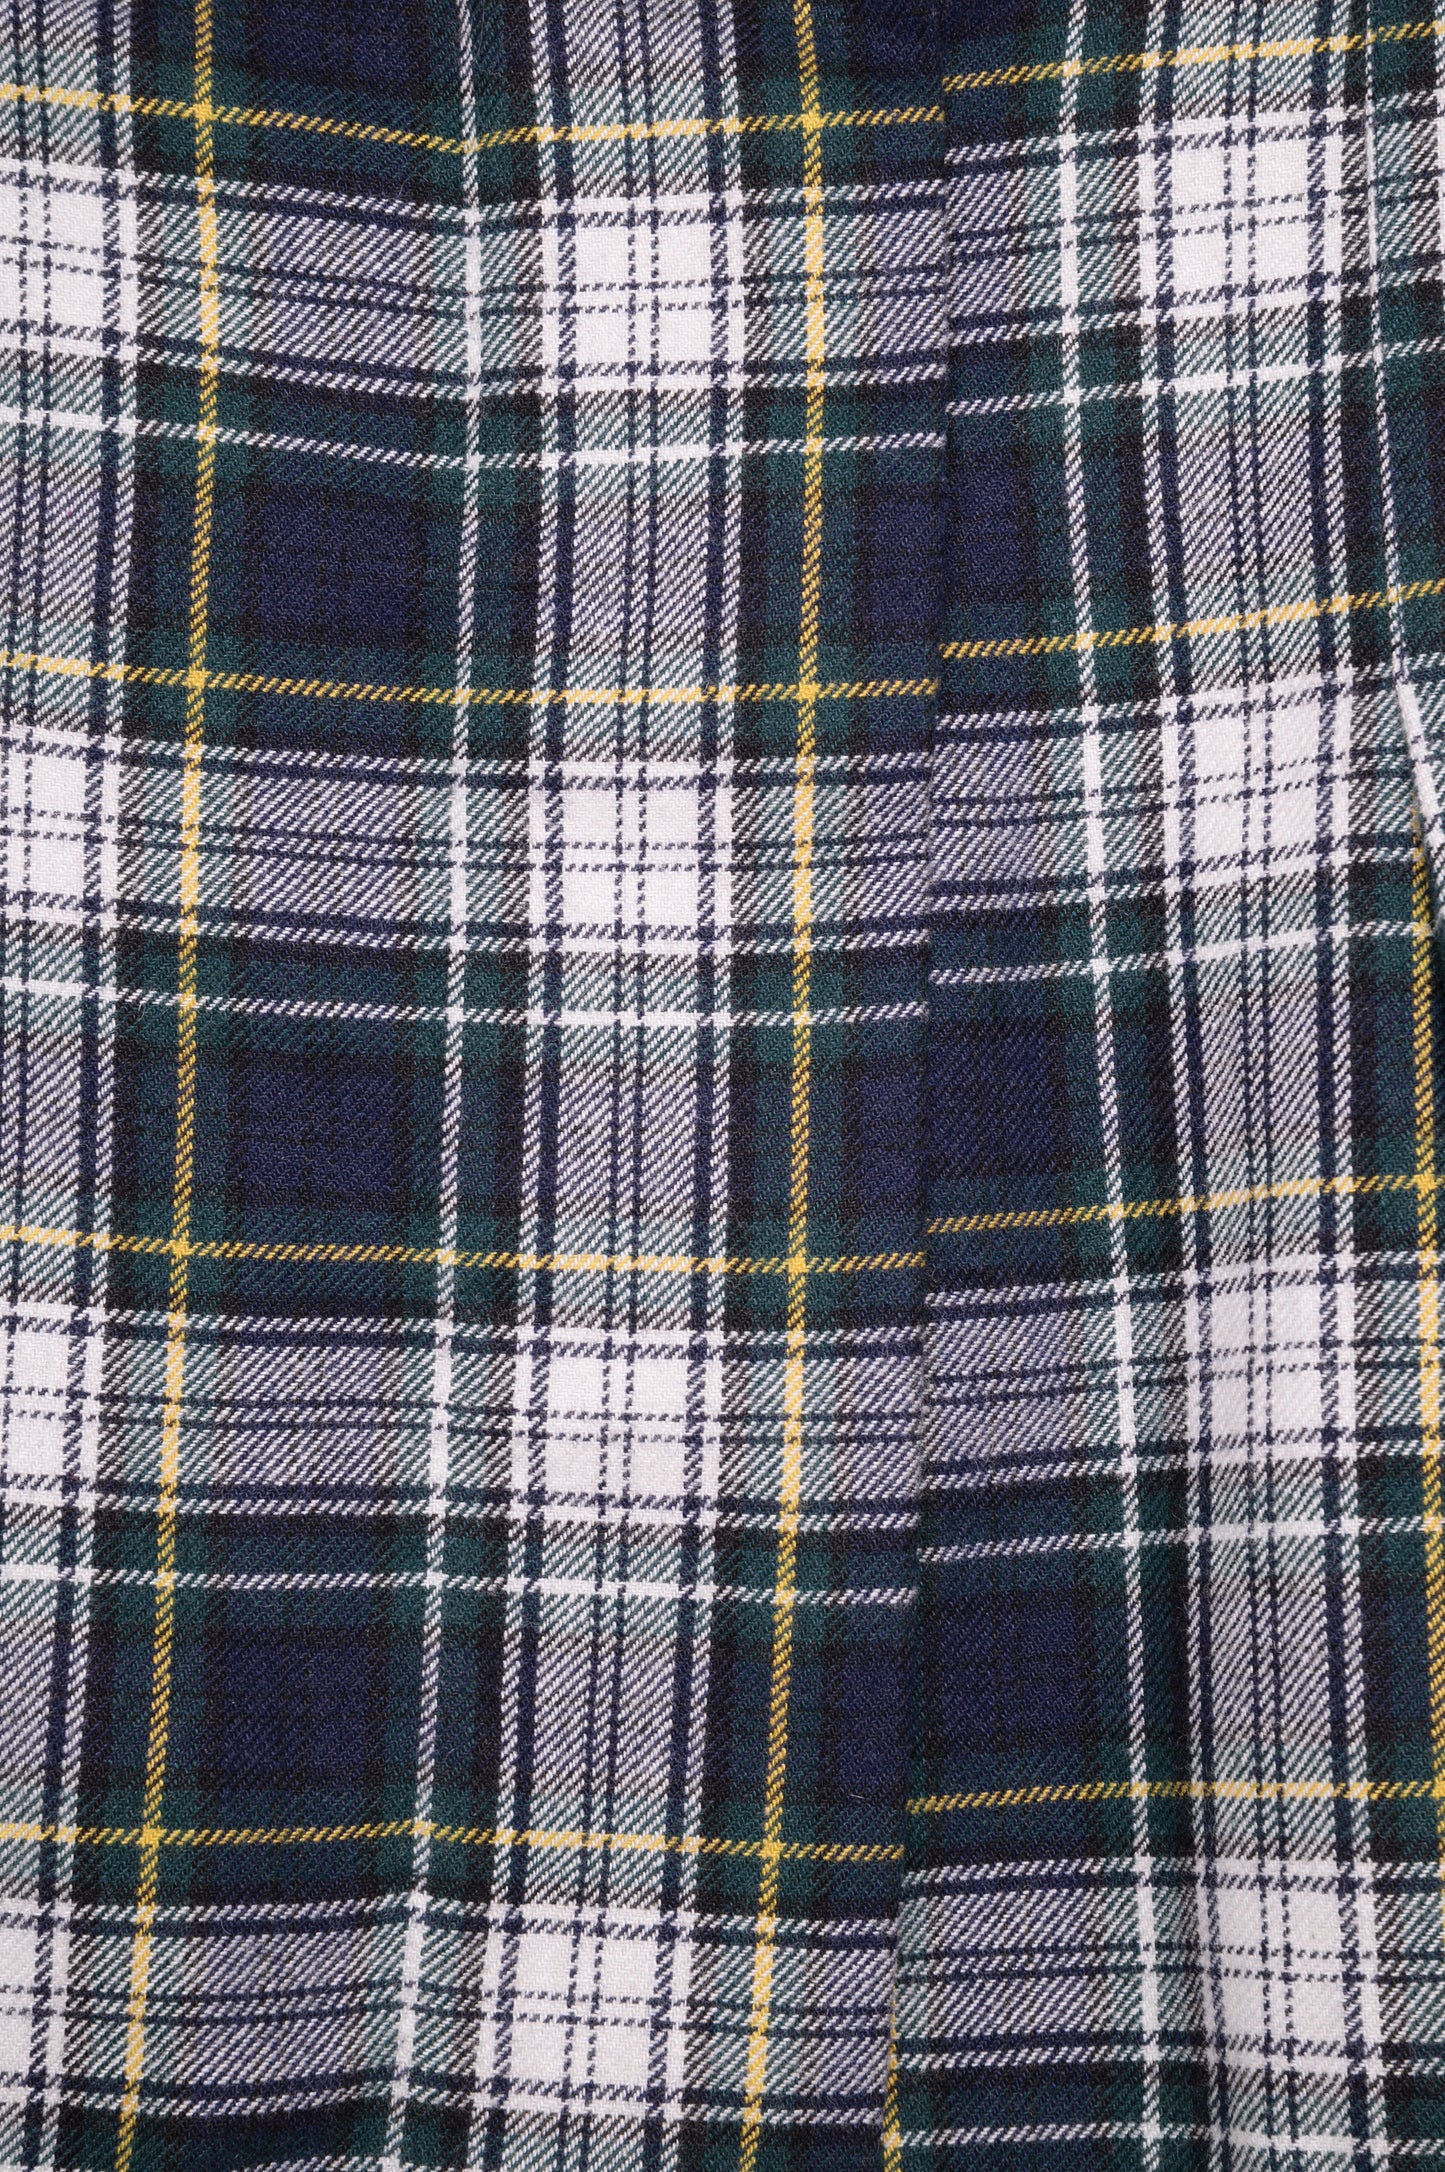 Ralph Lauren Pleated Mini Skirt